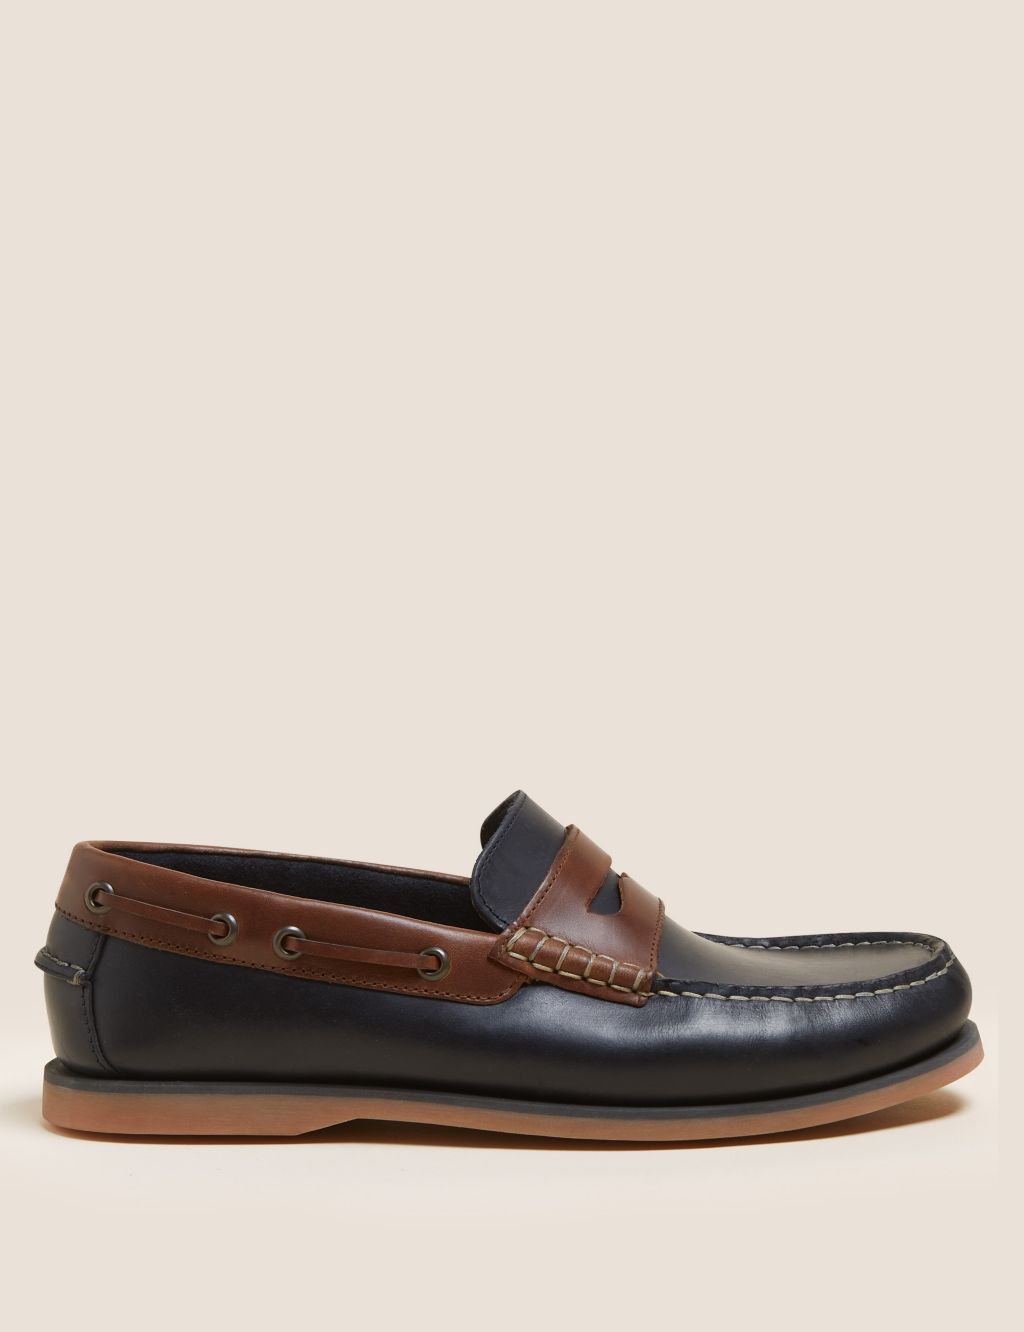 Leather Slip-On Boat Shoes image 1